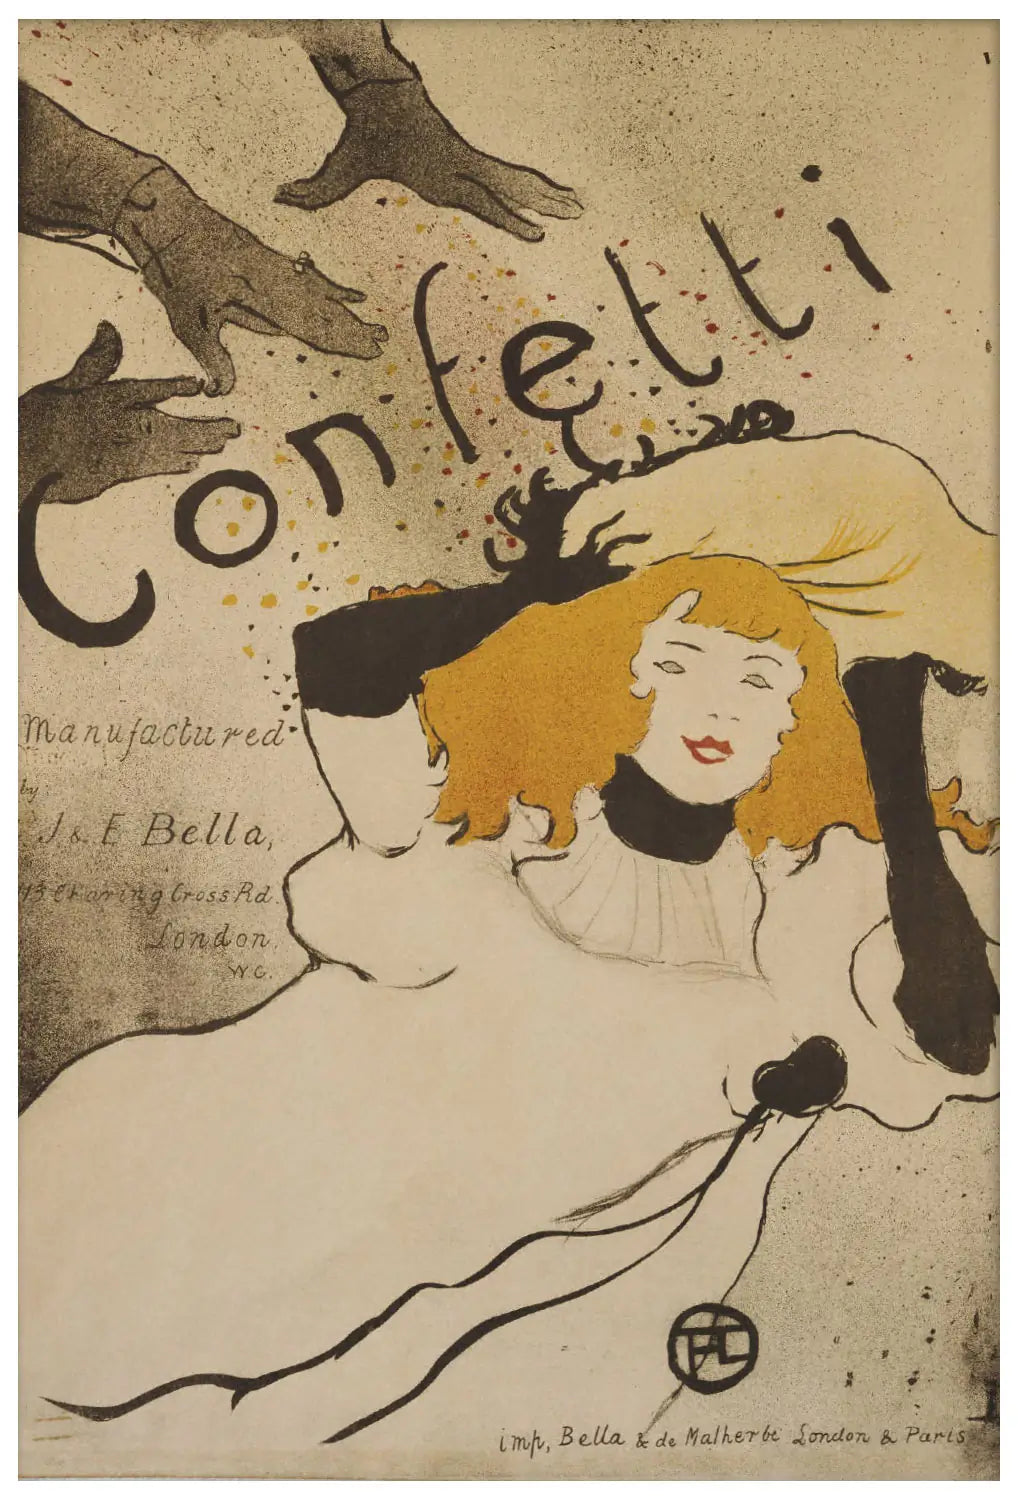 Toulouse-Lautrec "Confetti"